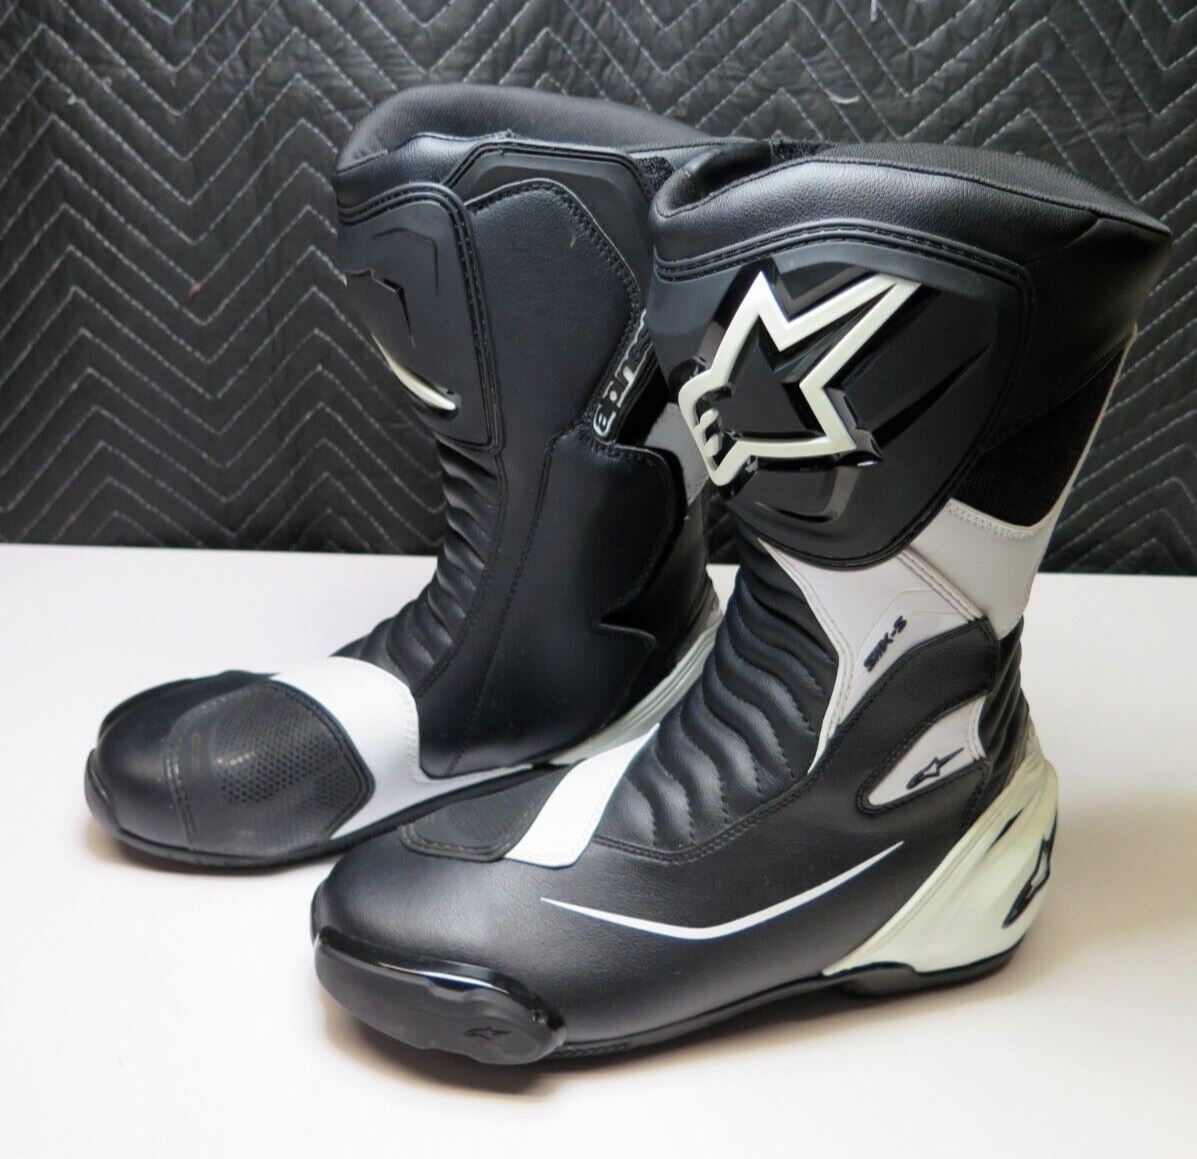 Alpinestars SMX S Men's Boots White/Black US Size 9.5 Euro 44 - Hardly worn